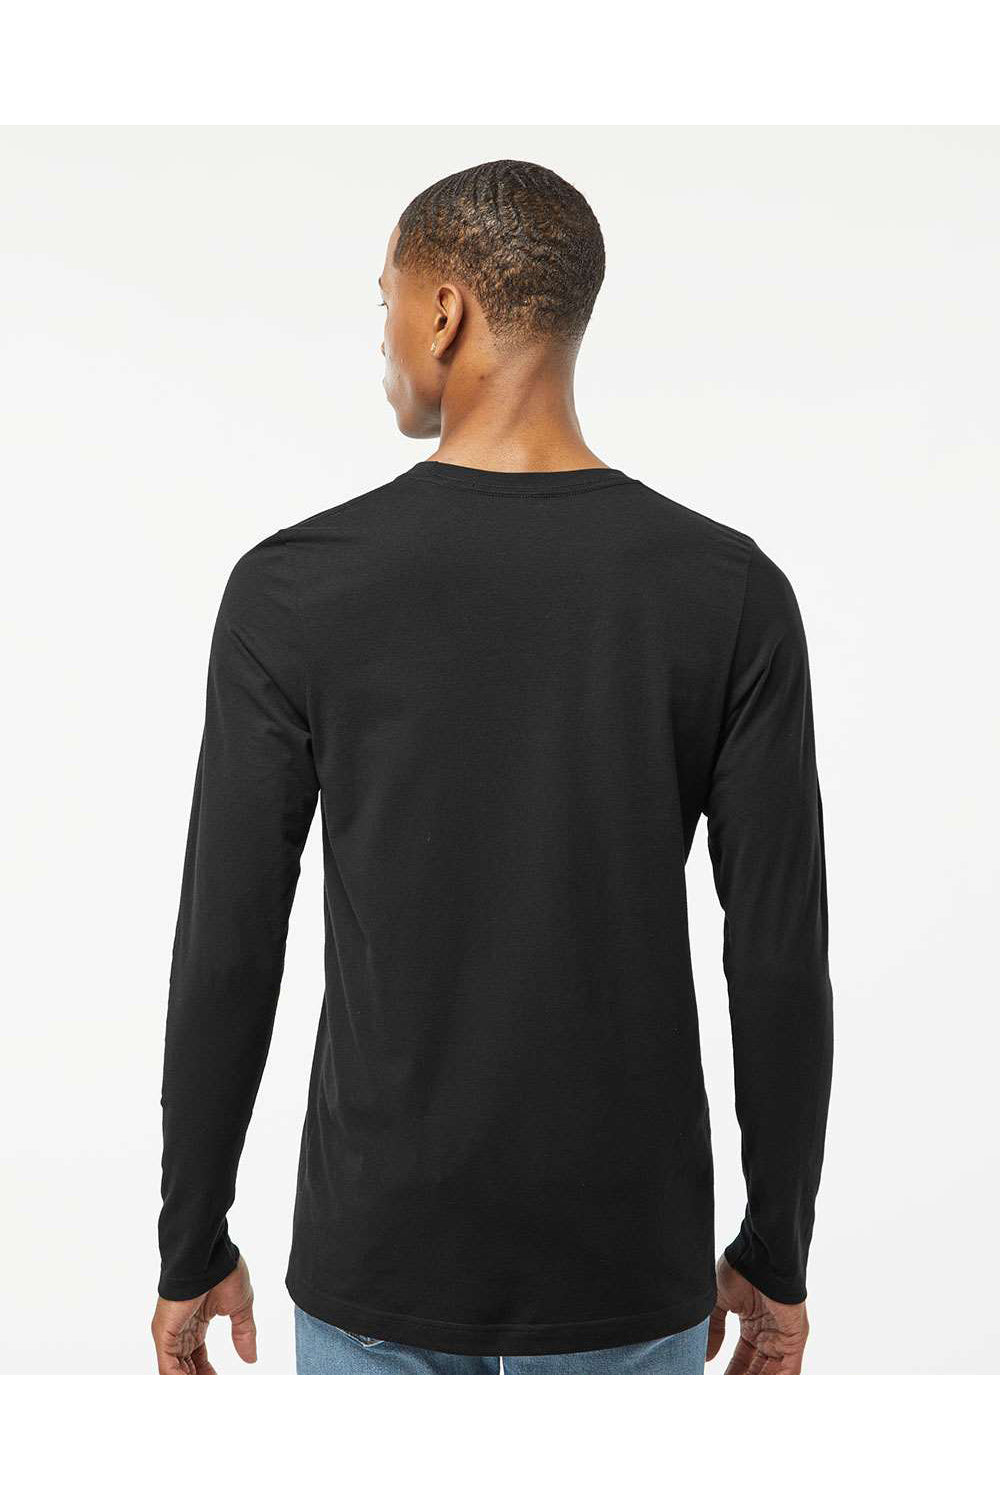 Tultex 591 Mens Premium Long Sleeve Crewneck T-Shirt Black Model Back